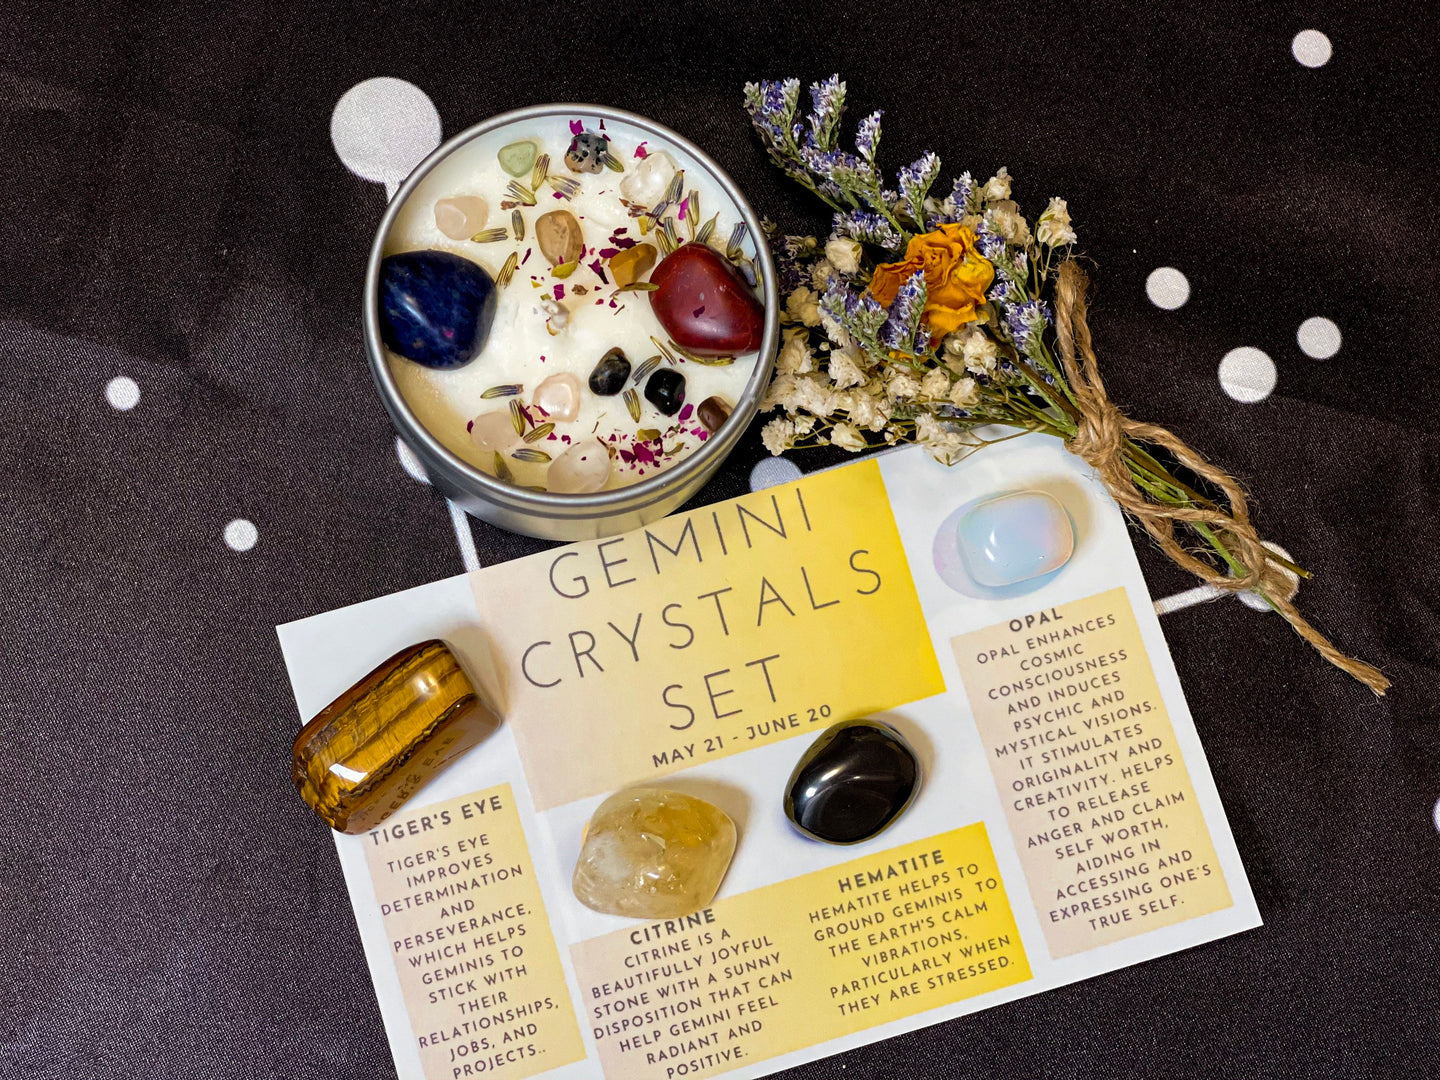 Gemini Crystal Set, Gemini Birthstones, Gemini Crystals, Gemini Stones, Gemini Candles and Crystals, Gemini Set for Birthday